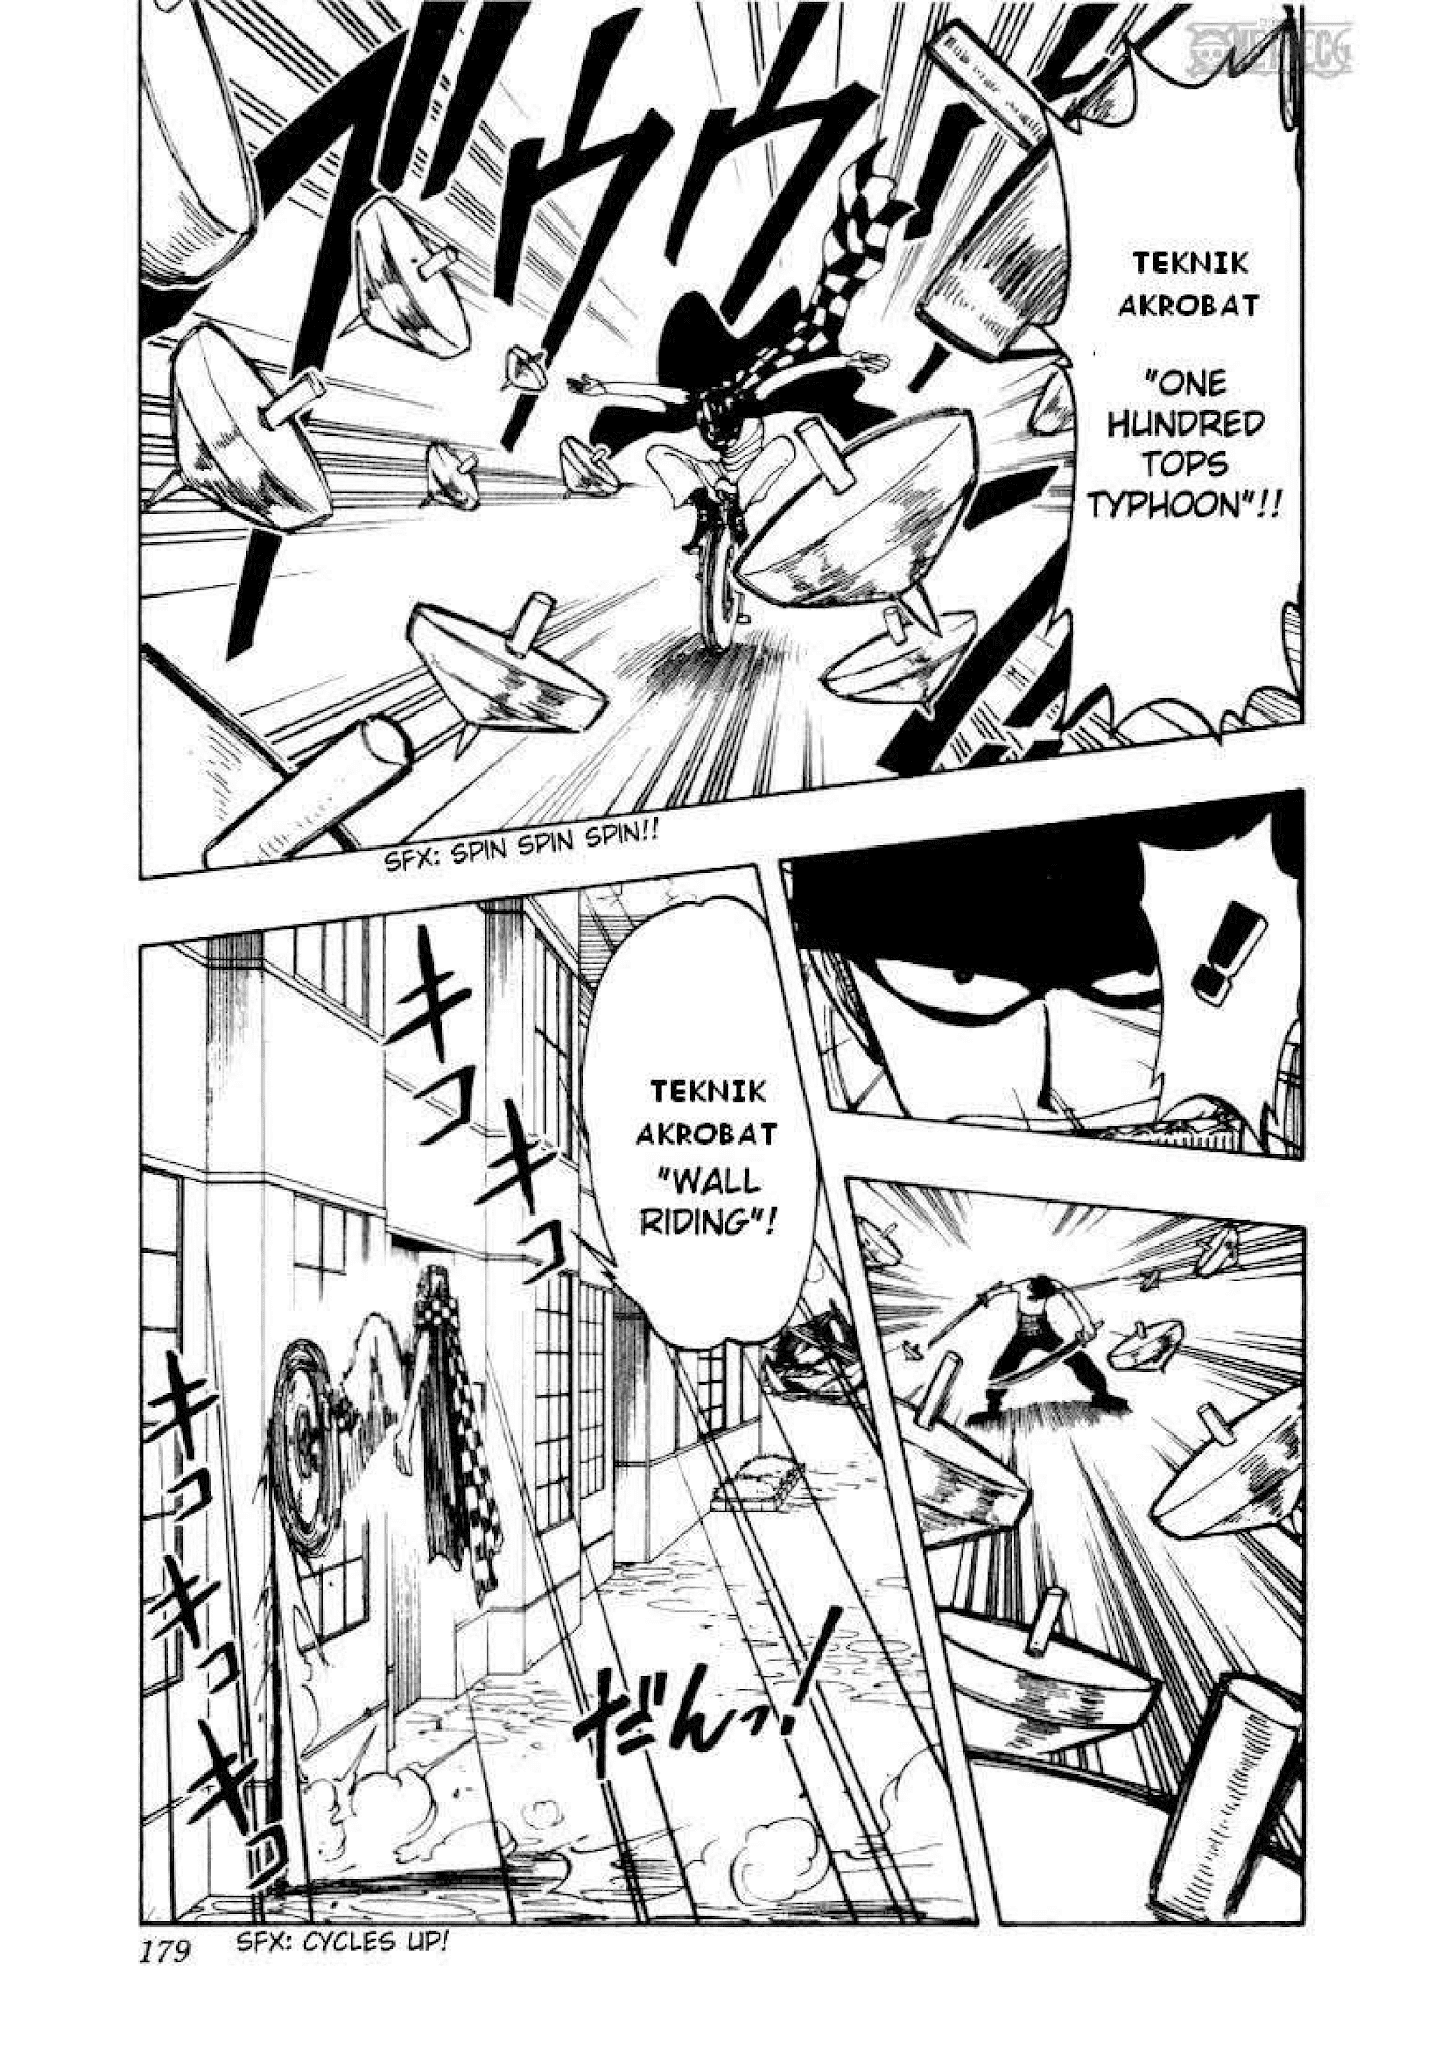 Manga One Piece Chapter 0017 Bahasa Indonesia